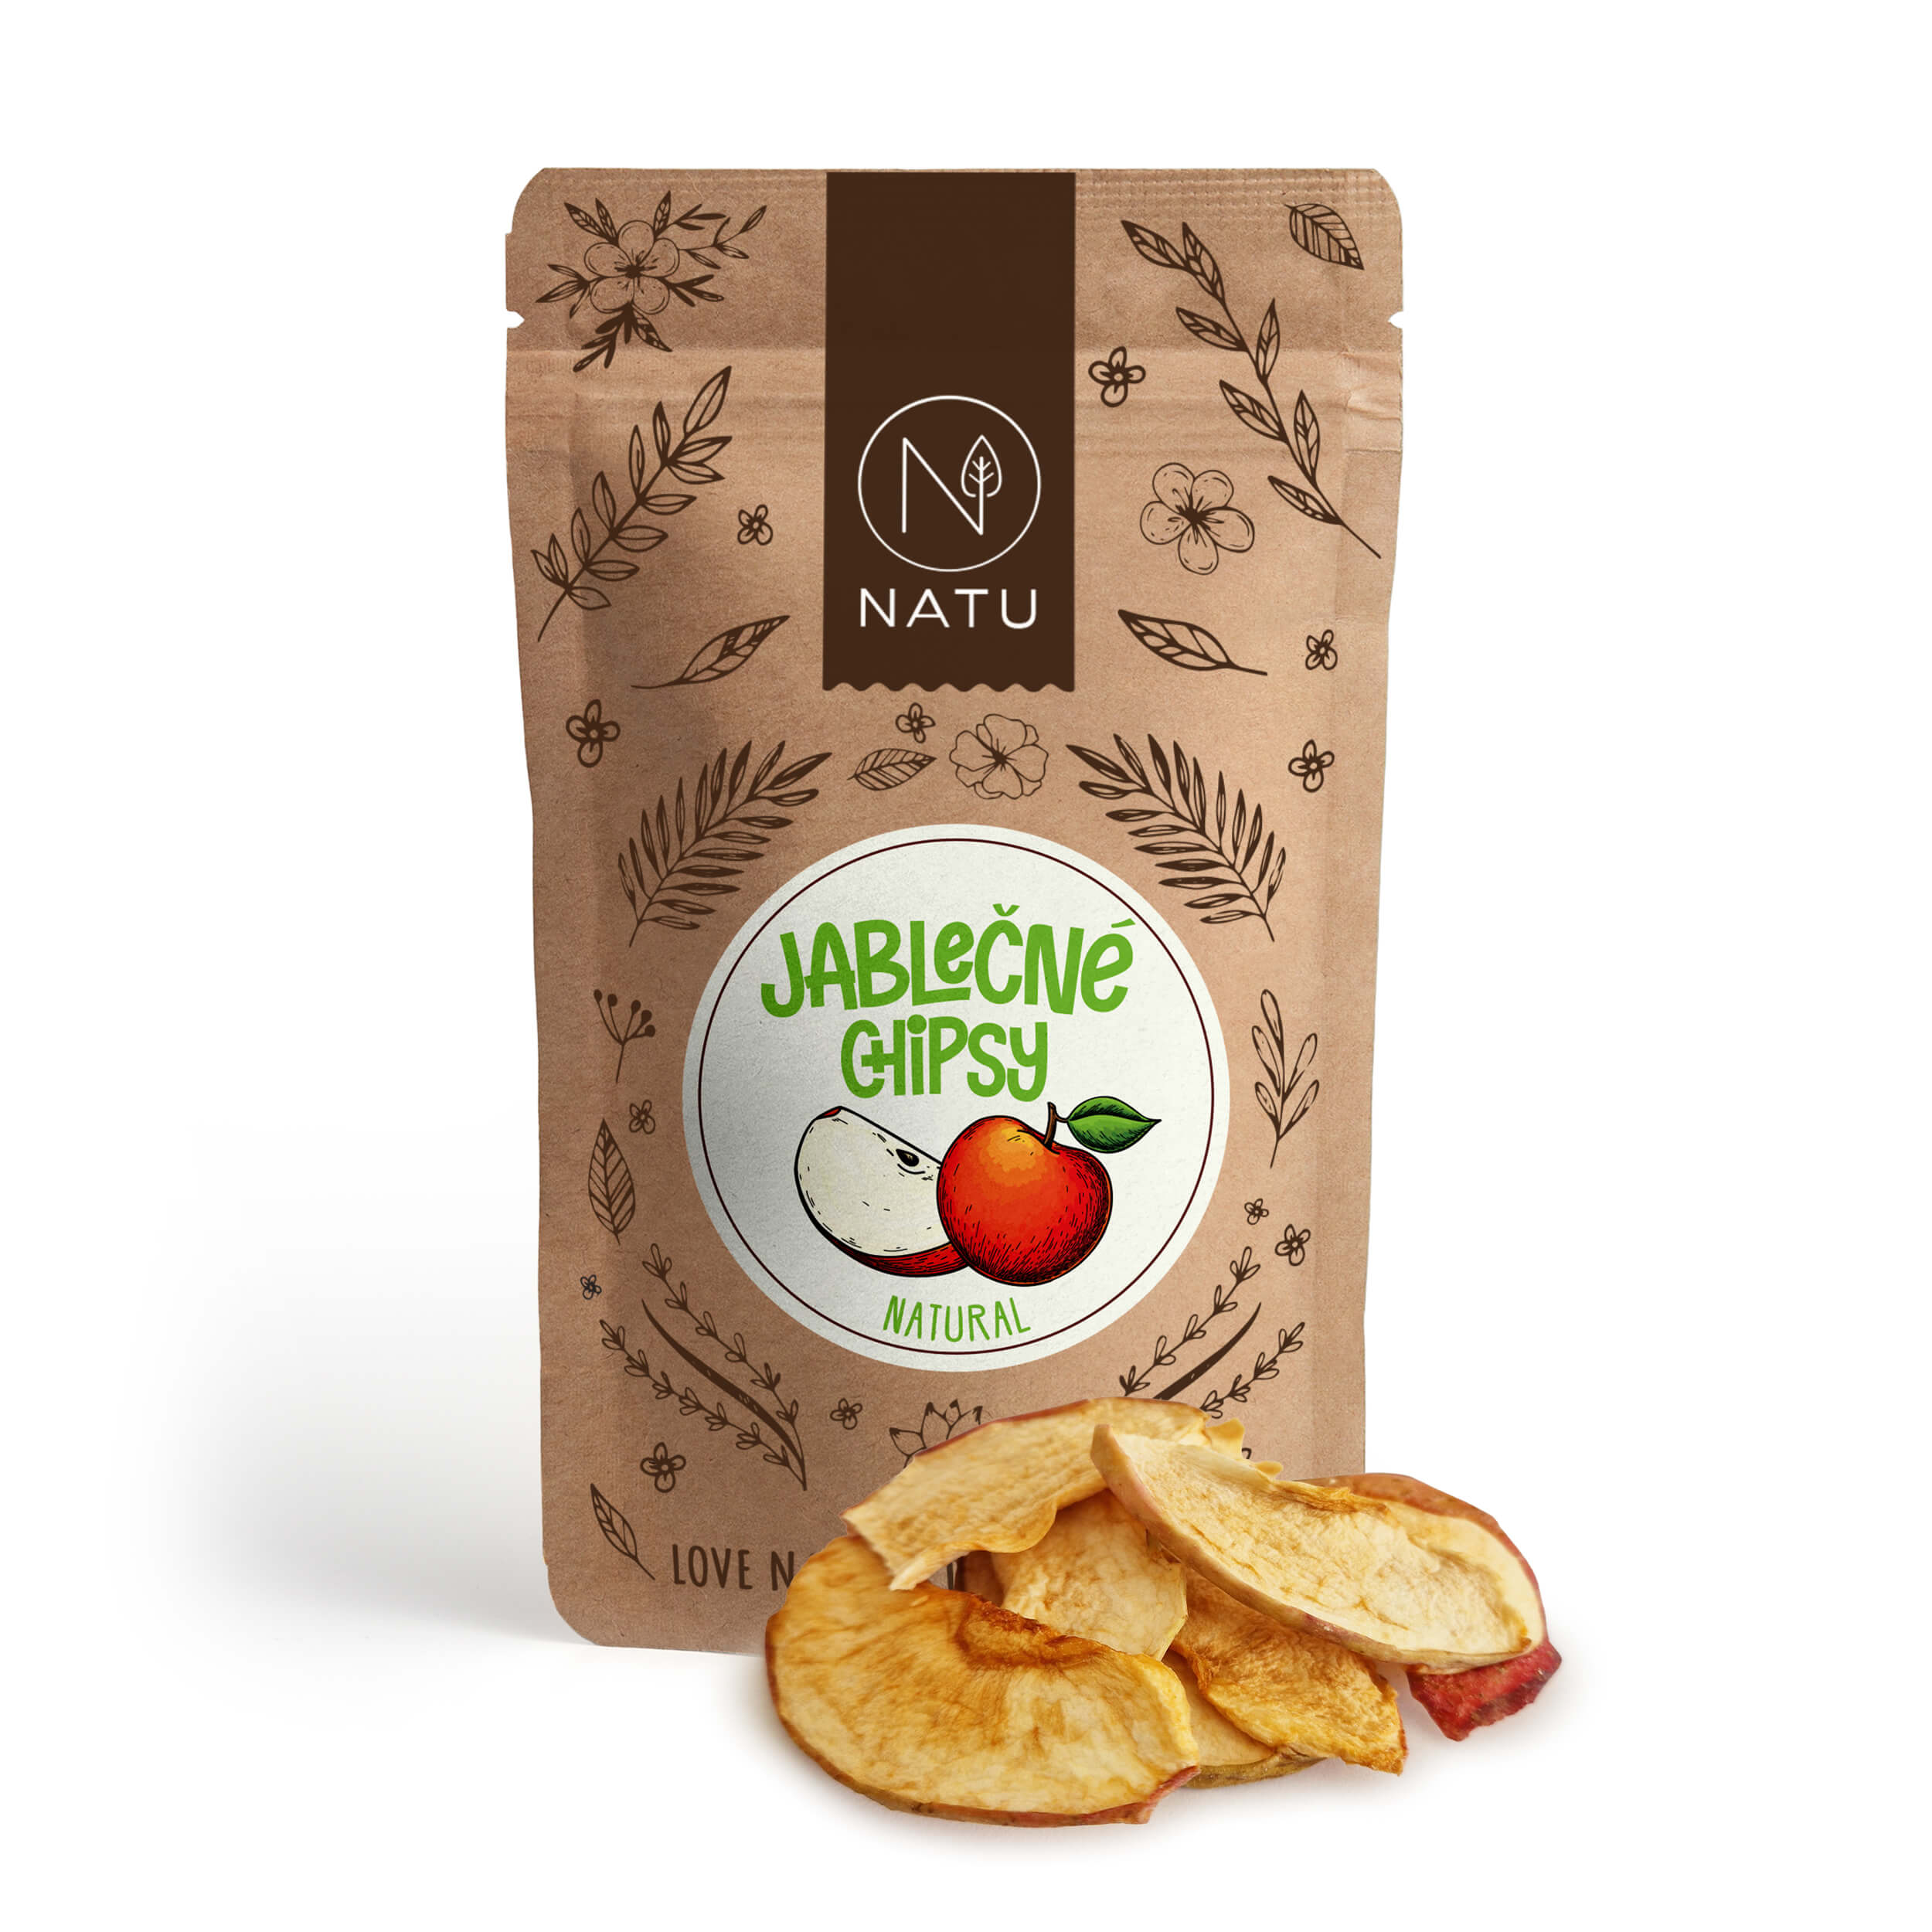 NATU Jablečné chipsy natural 70g